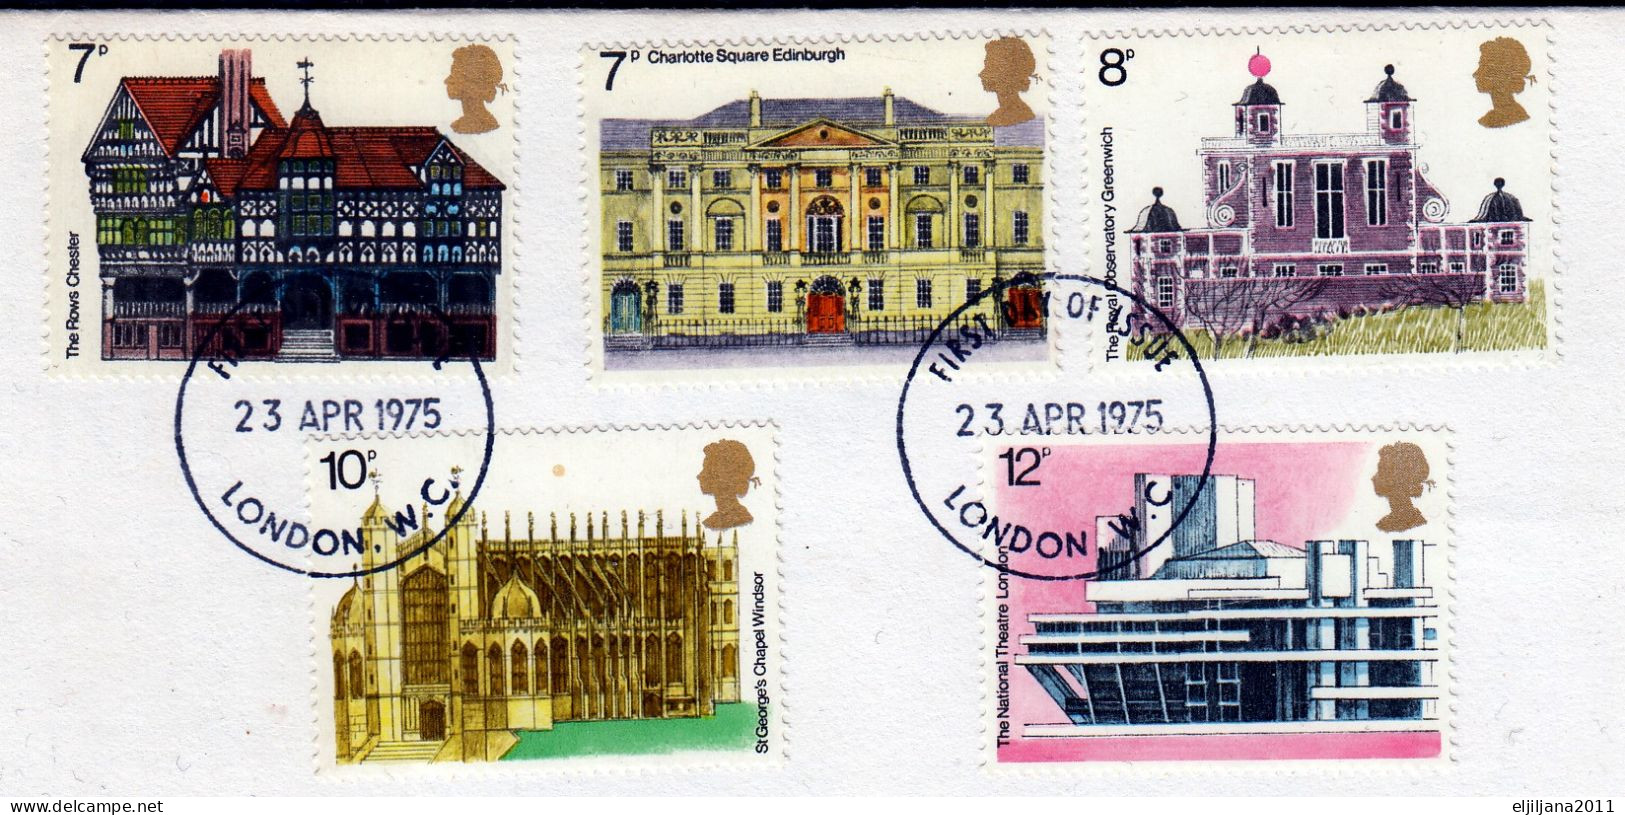 Great Britain GB 1975 QEII ⁕ European Architectural Heritage Year Mi.673-677 ⁕ FDC Cover Traveled London - 1971-1980 Dezimalausgaben